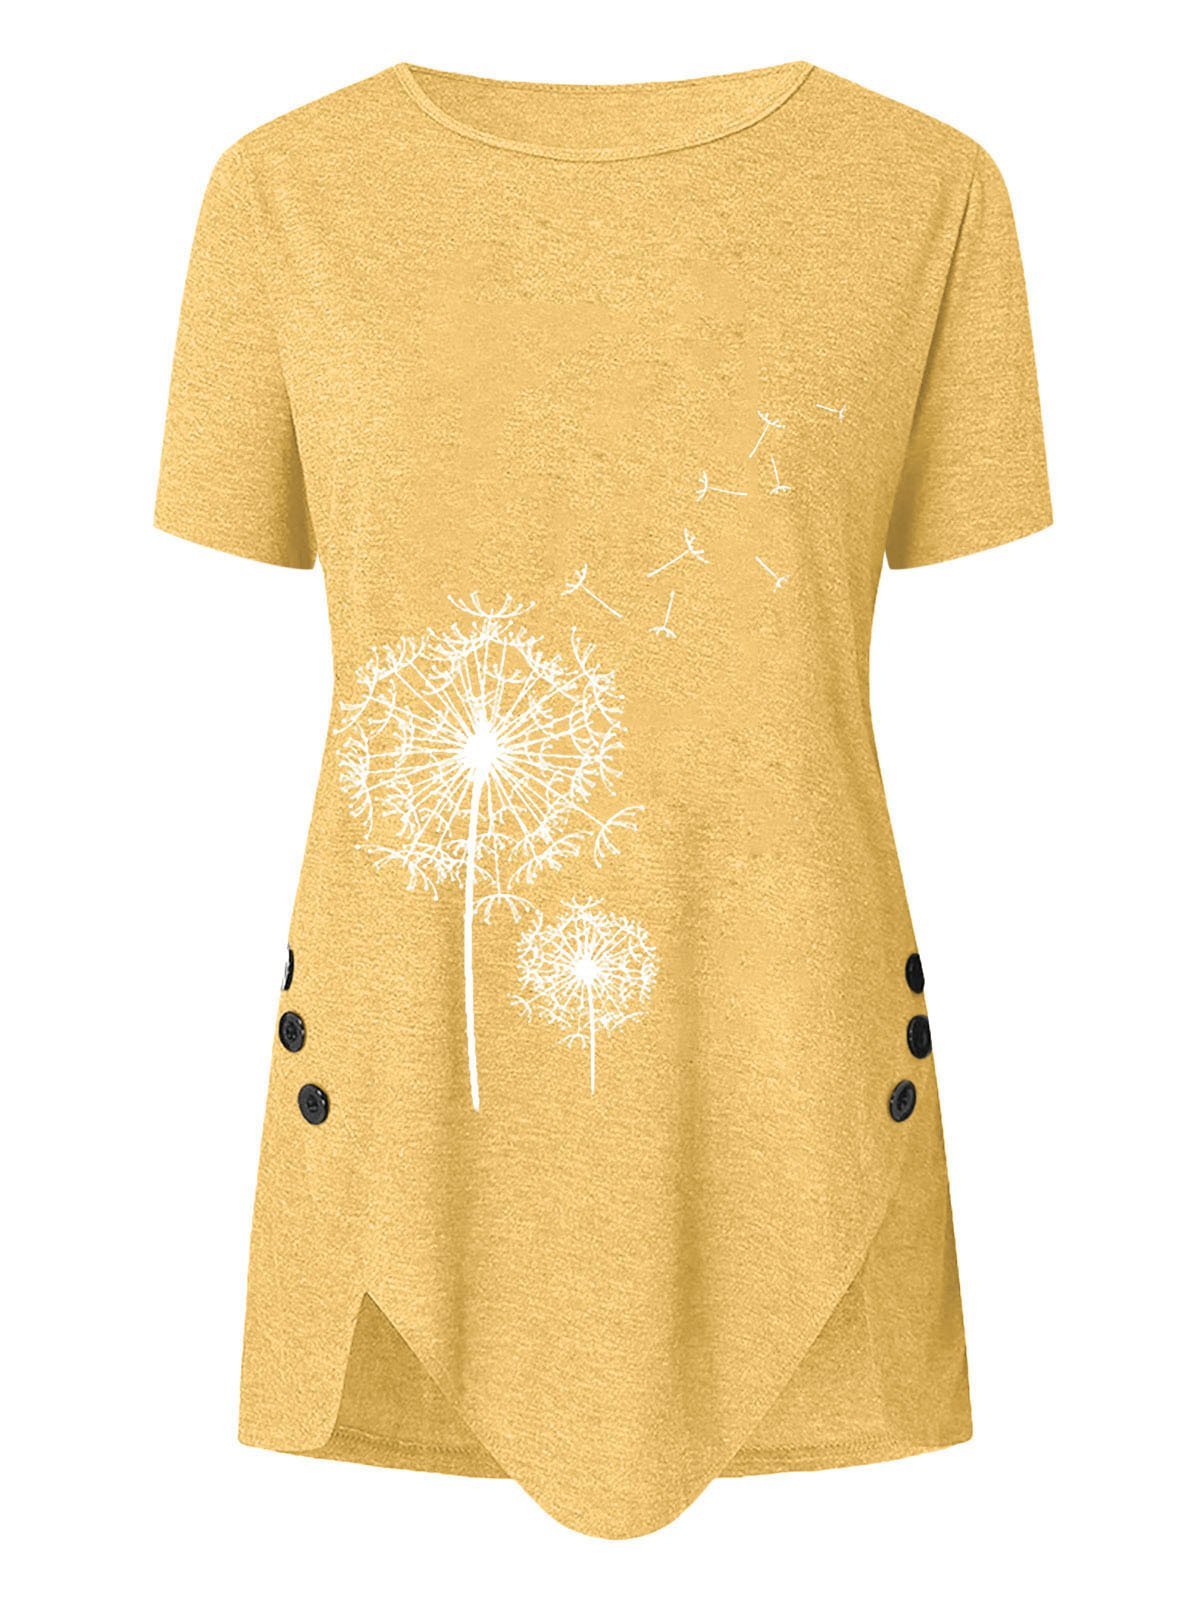 Women Short Sleeve Round Neck Floral Printed Top Irregular Hem T-shirt